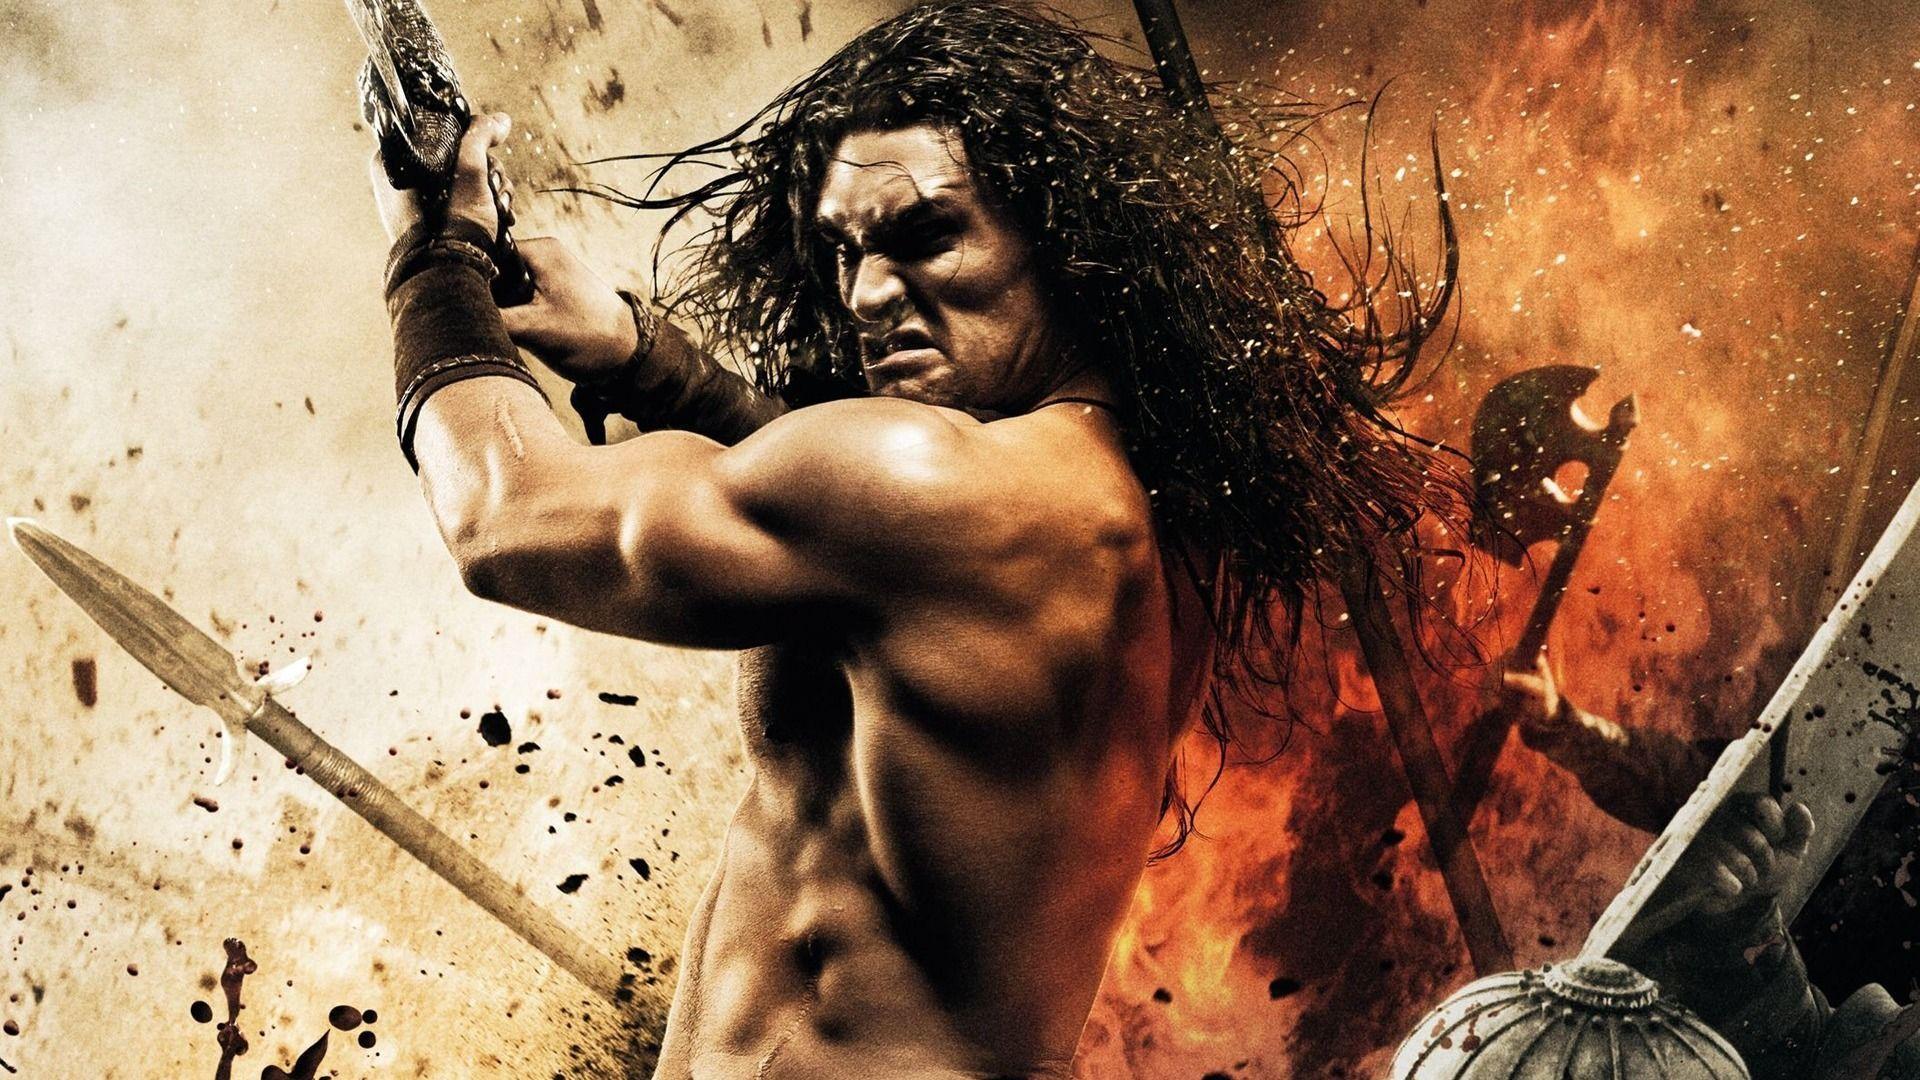 Conan the Barbarian 2011 movie wallpaper 03 wallpaper